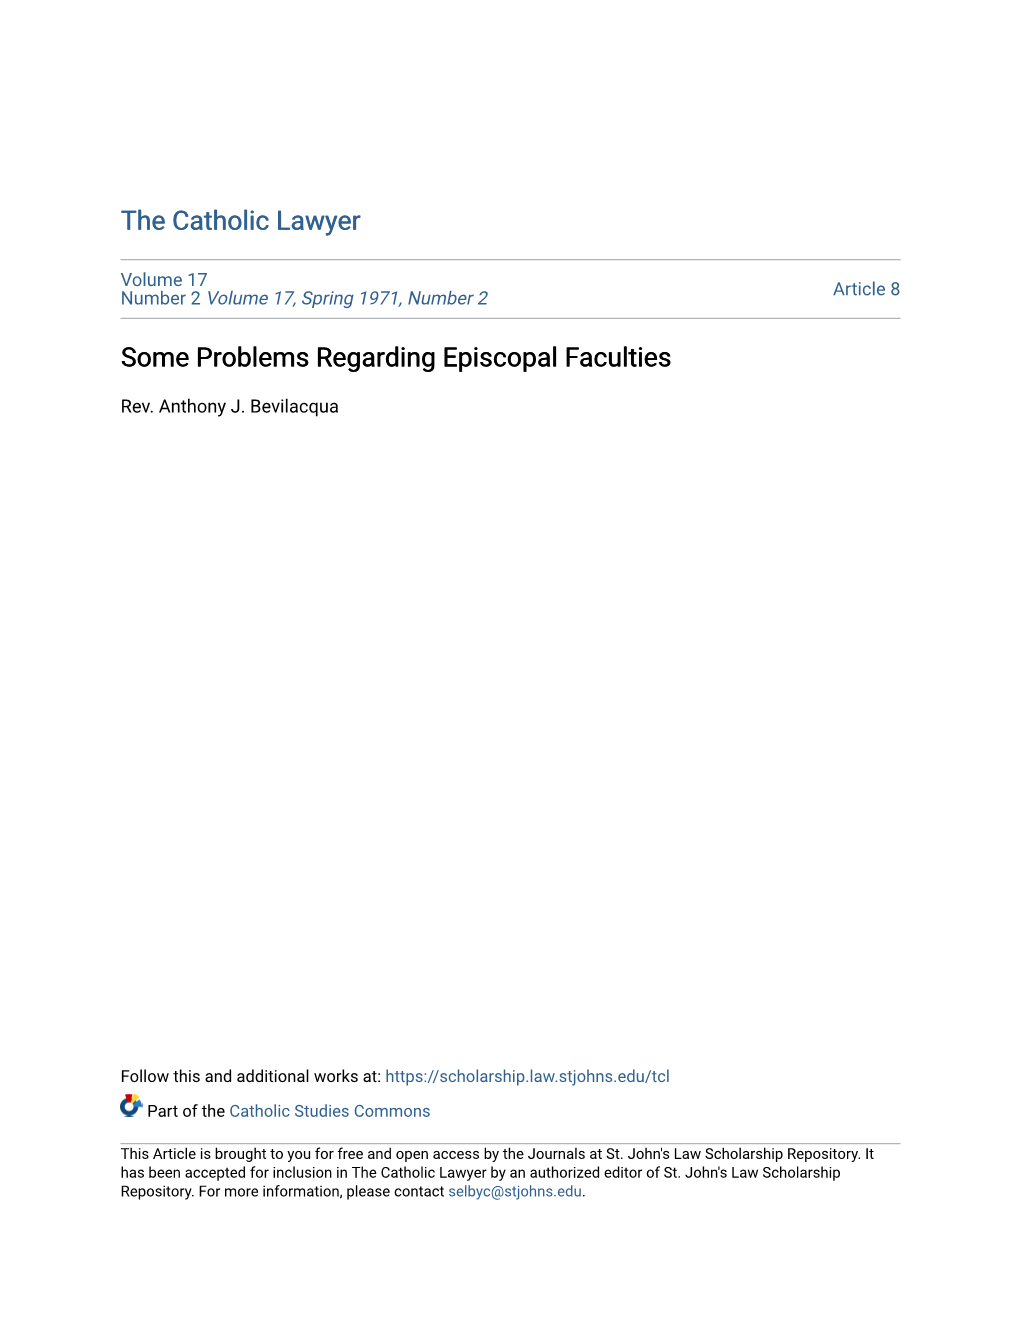 Some Problems Regarding Episcopal Faculties